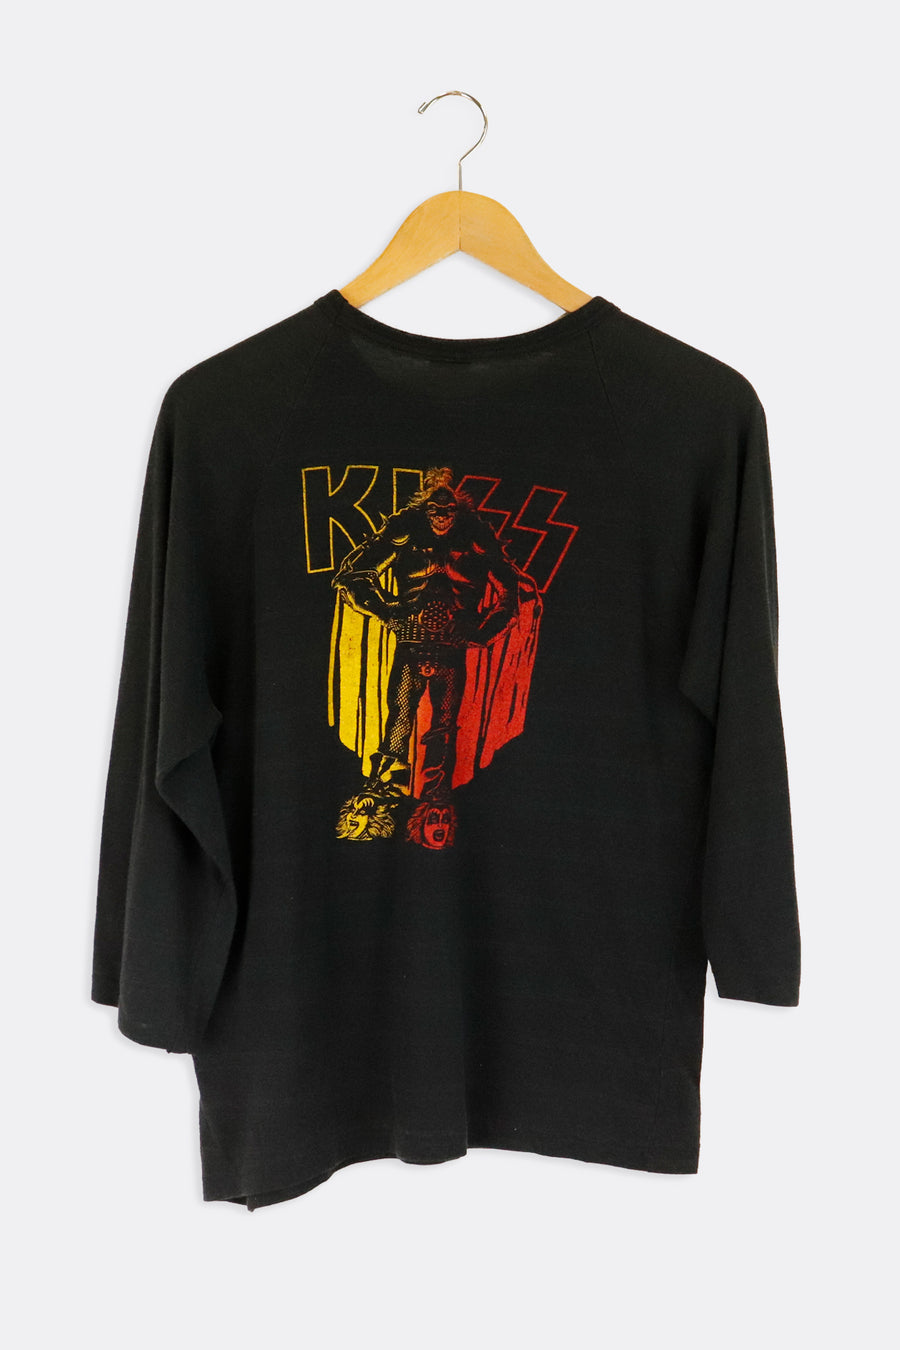 Vintage 80s Kiss Band Raglan T Shirt Sz XL